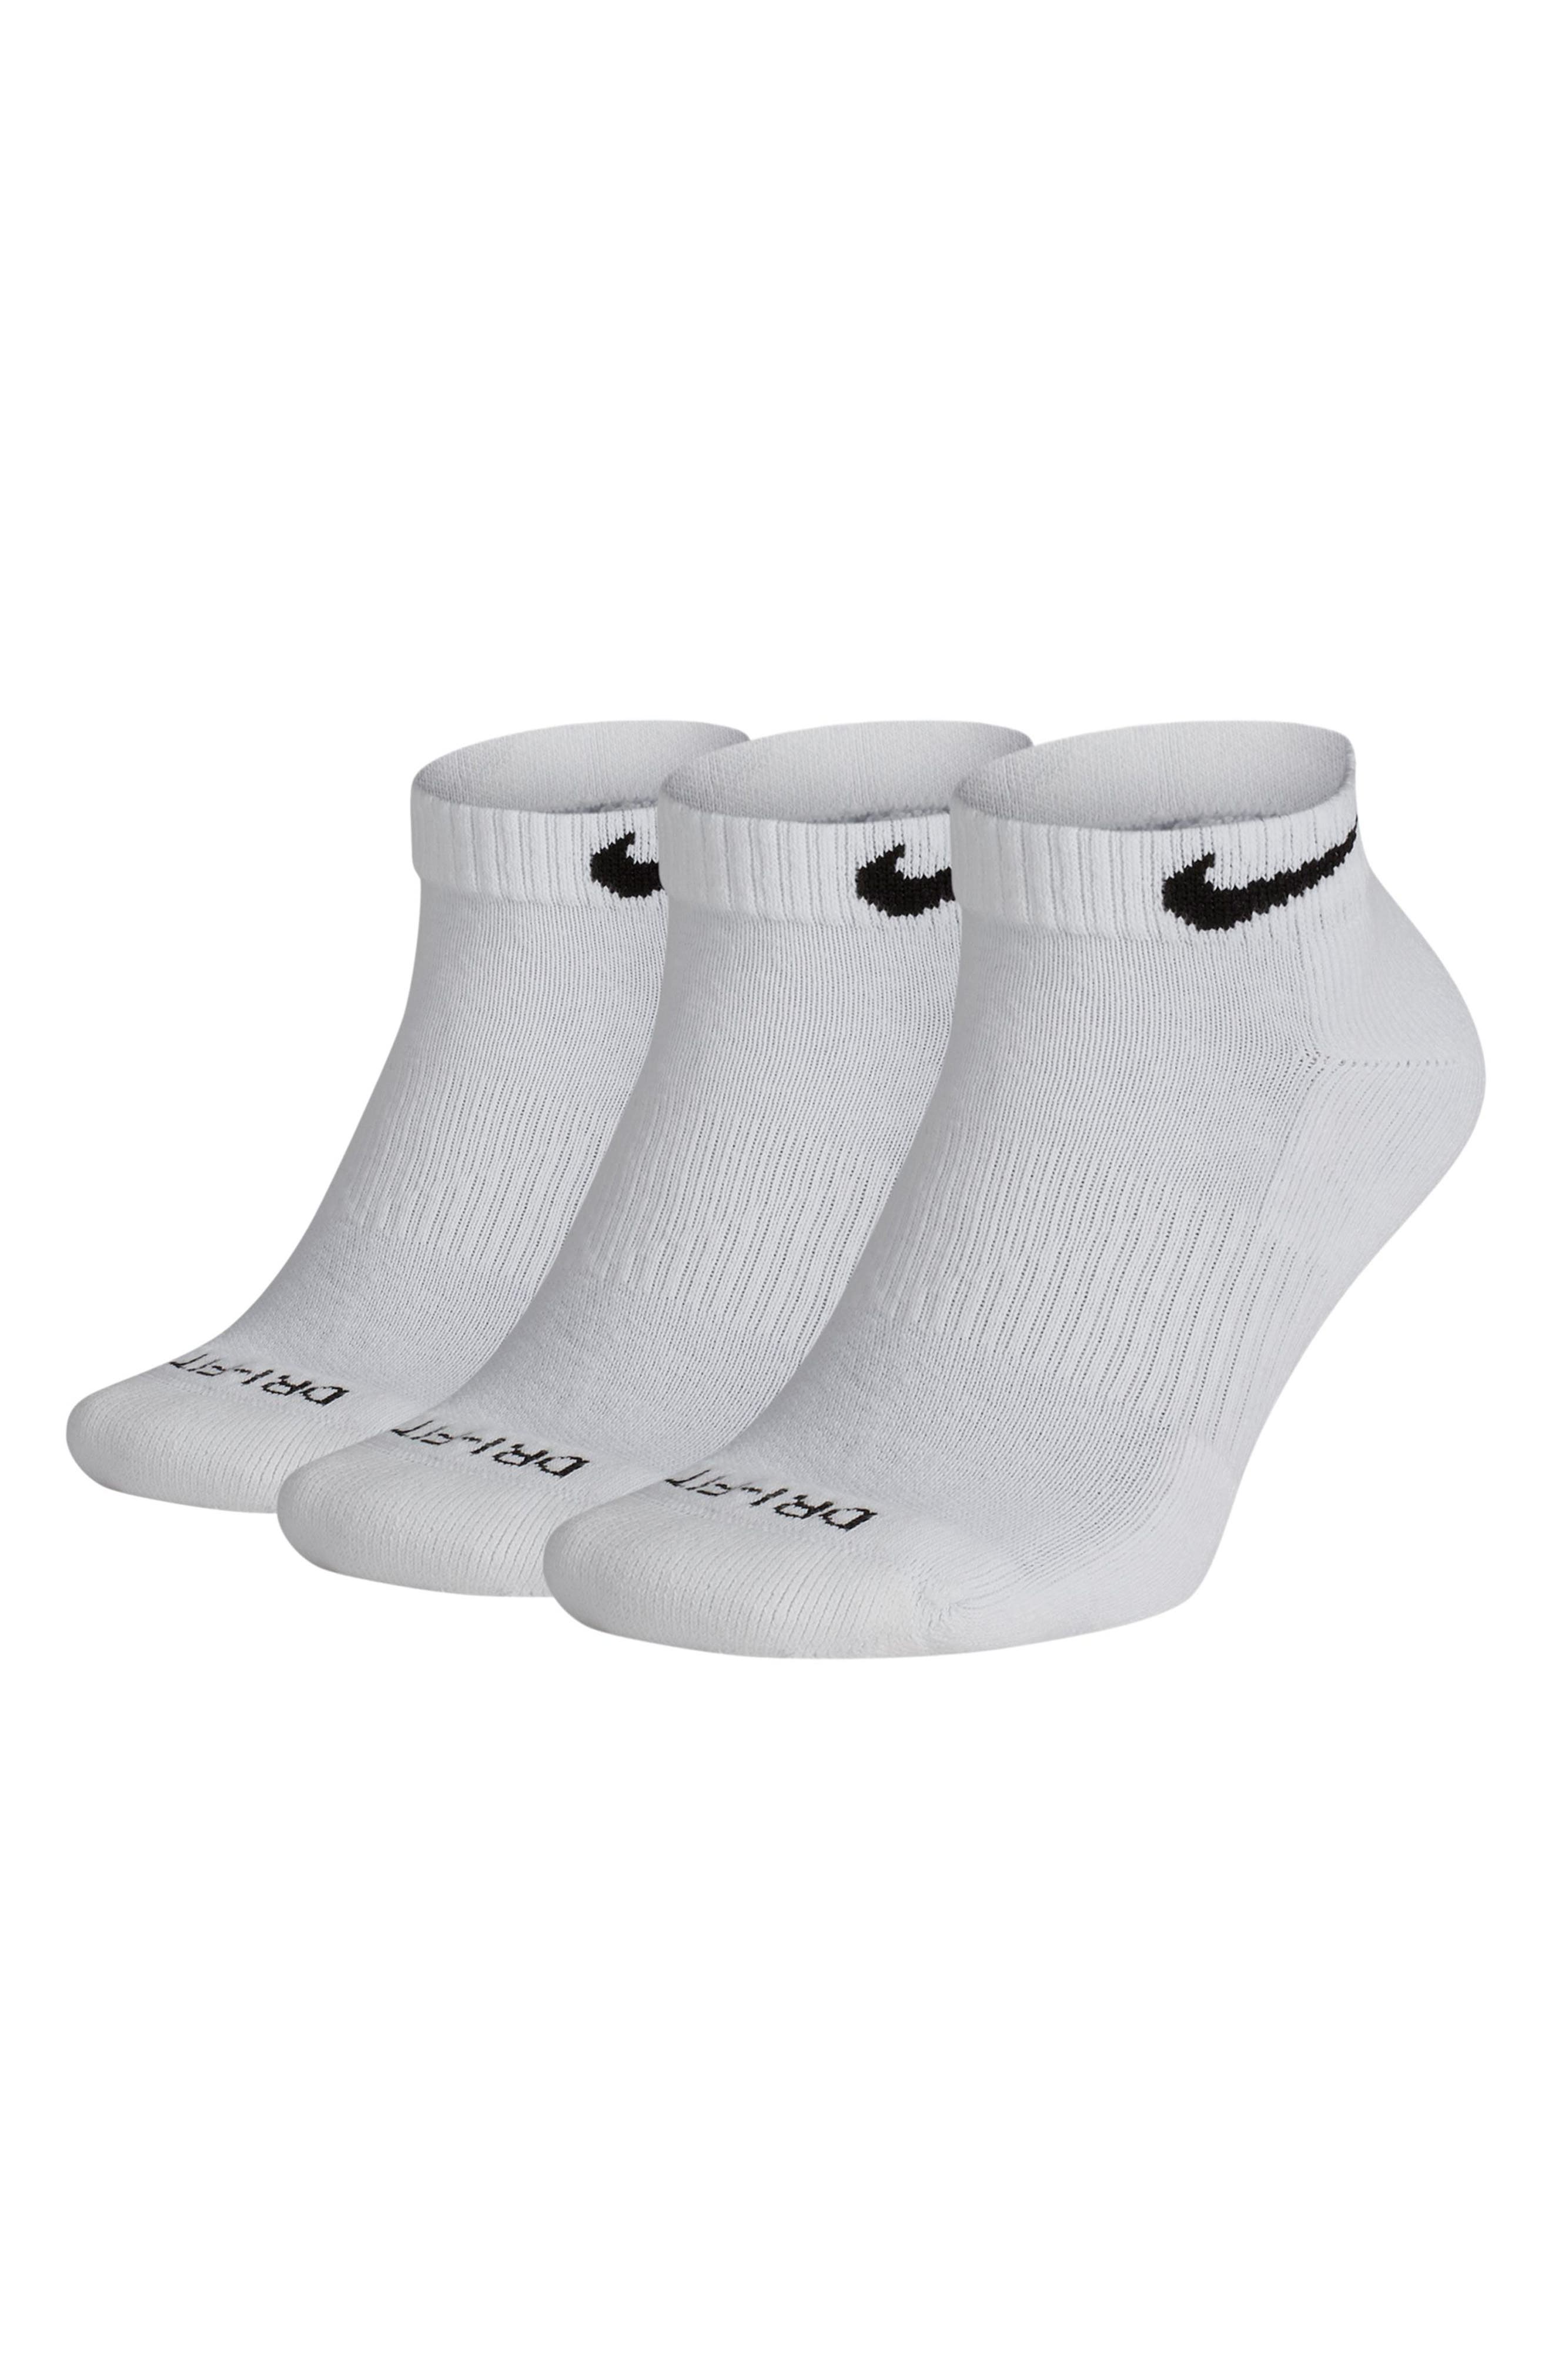 where to get cheap nike socks